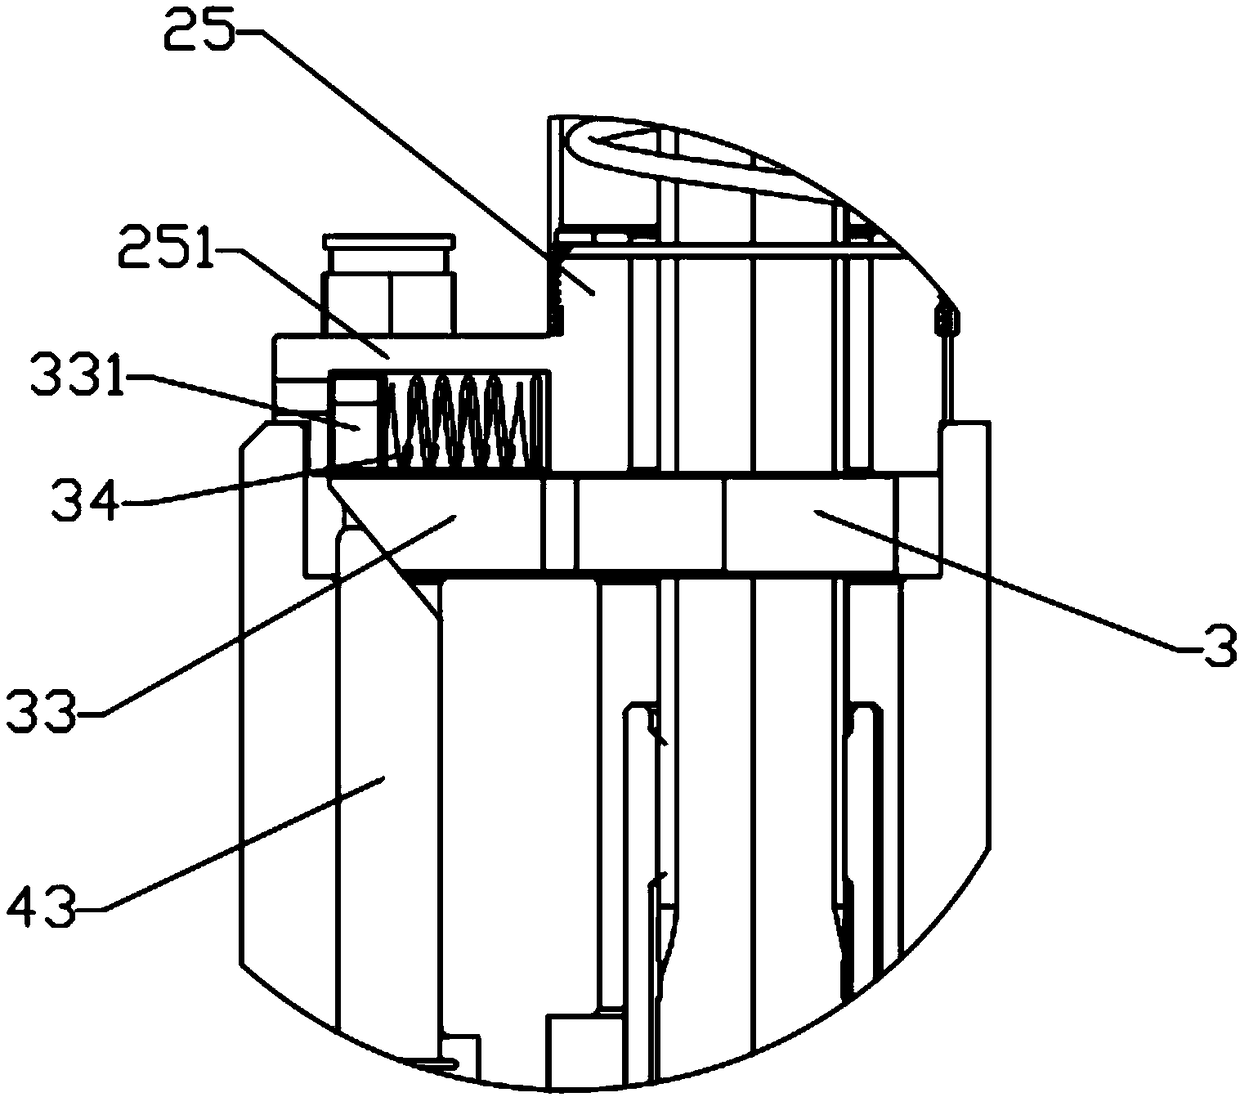 Pressure type gang drill self-locking mechanism